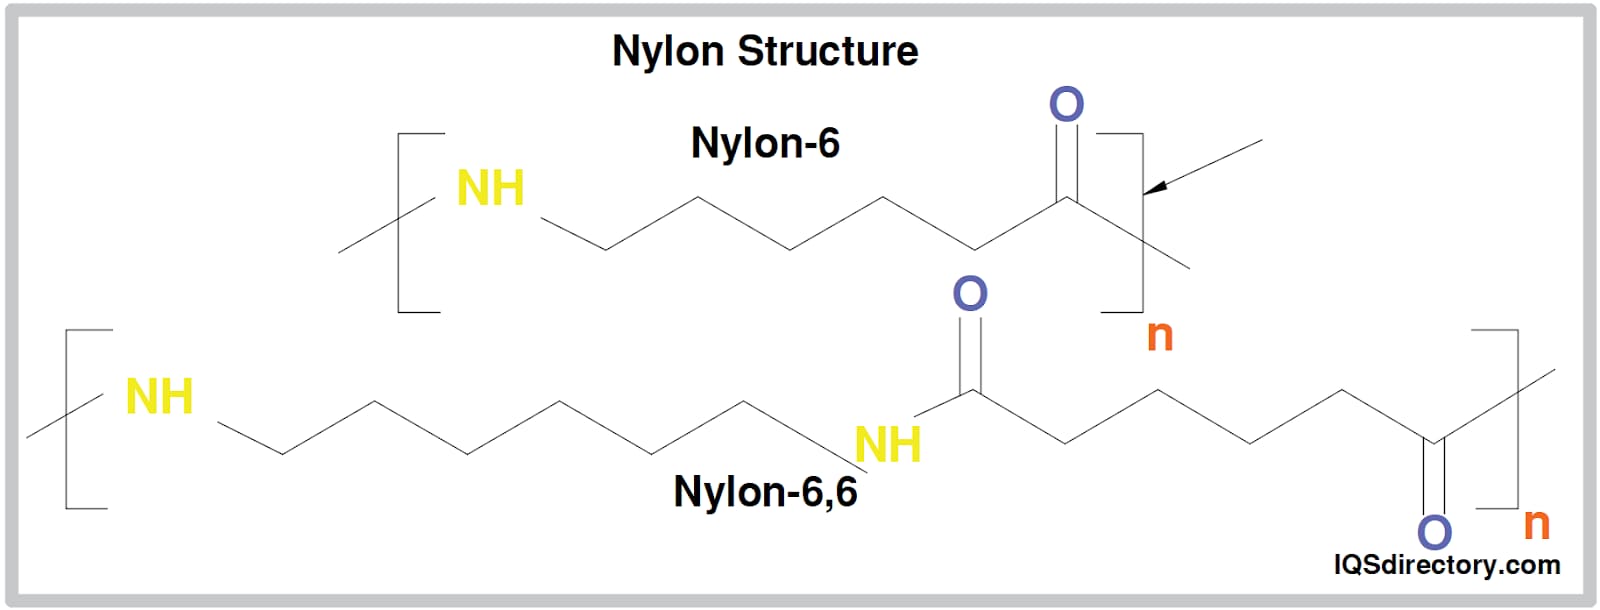 Nylon Structure